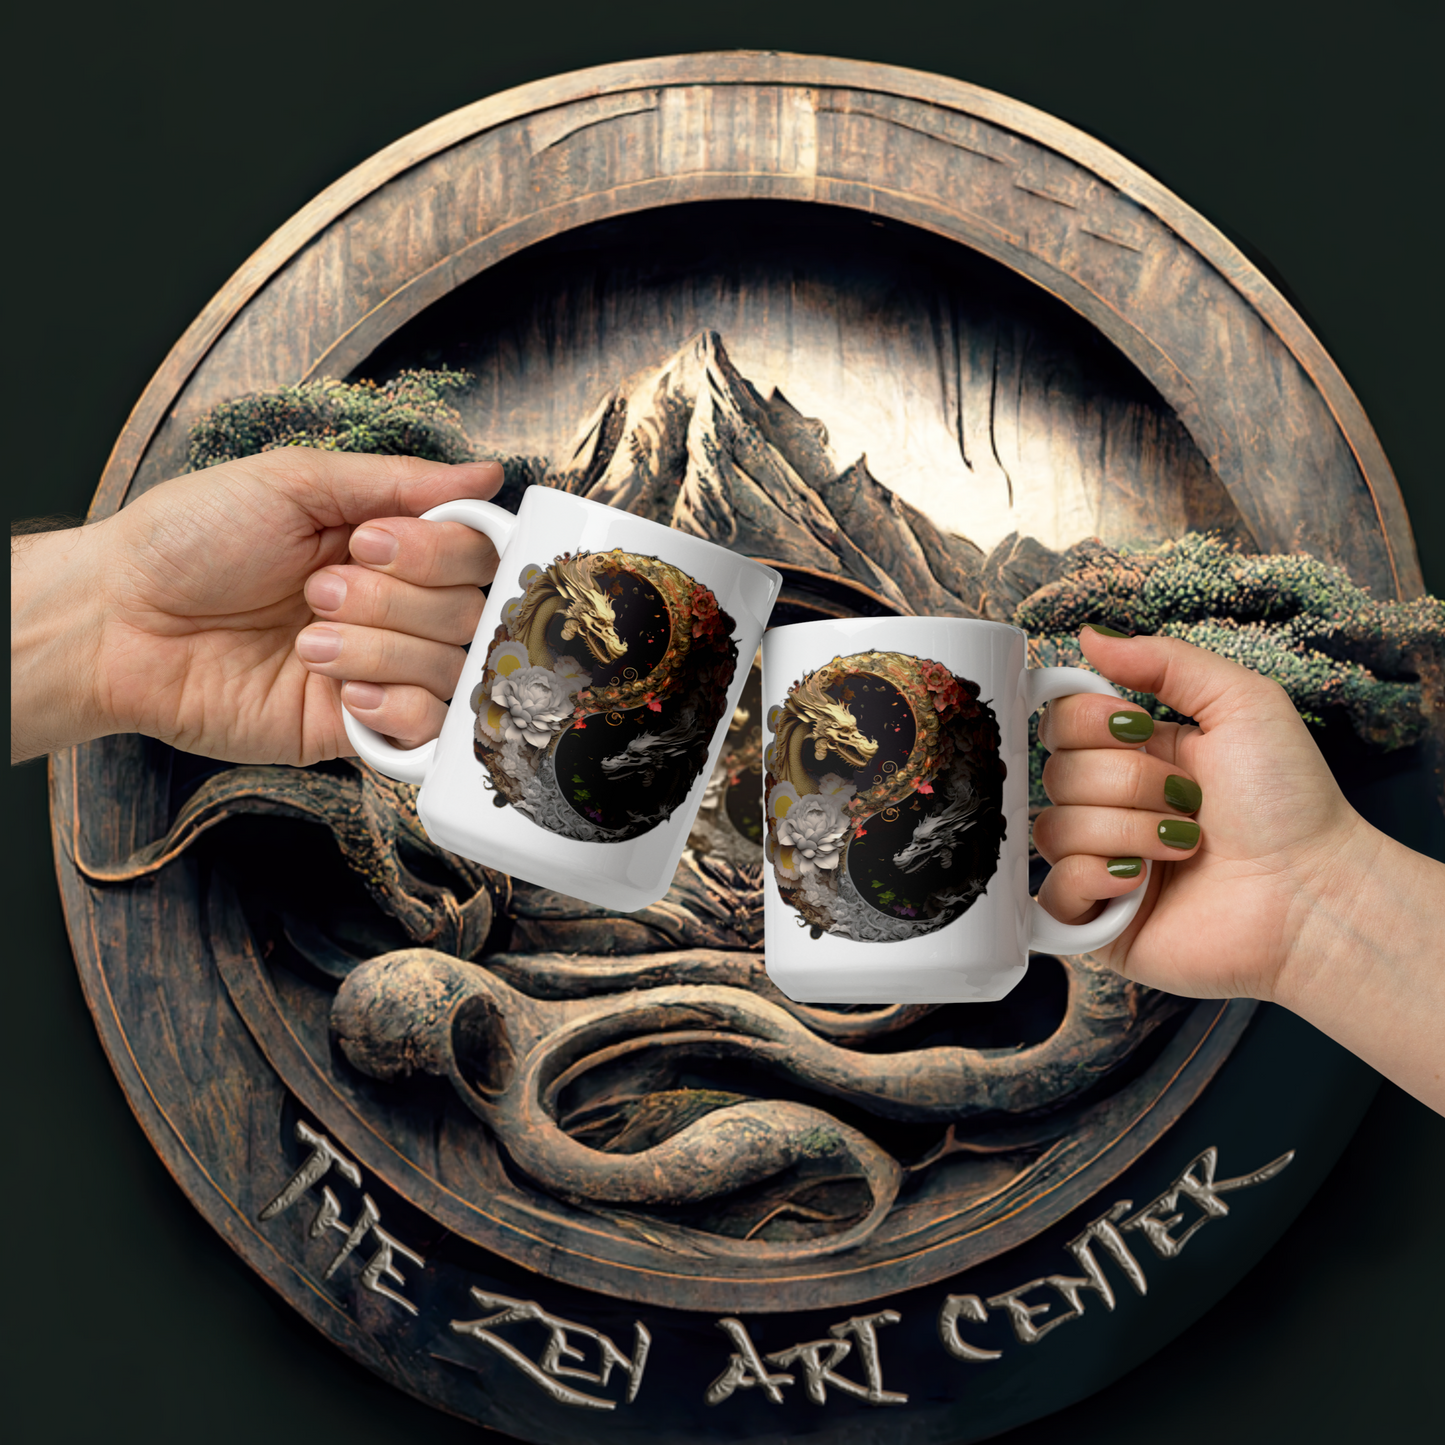 Dancing Dragons glossy mug